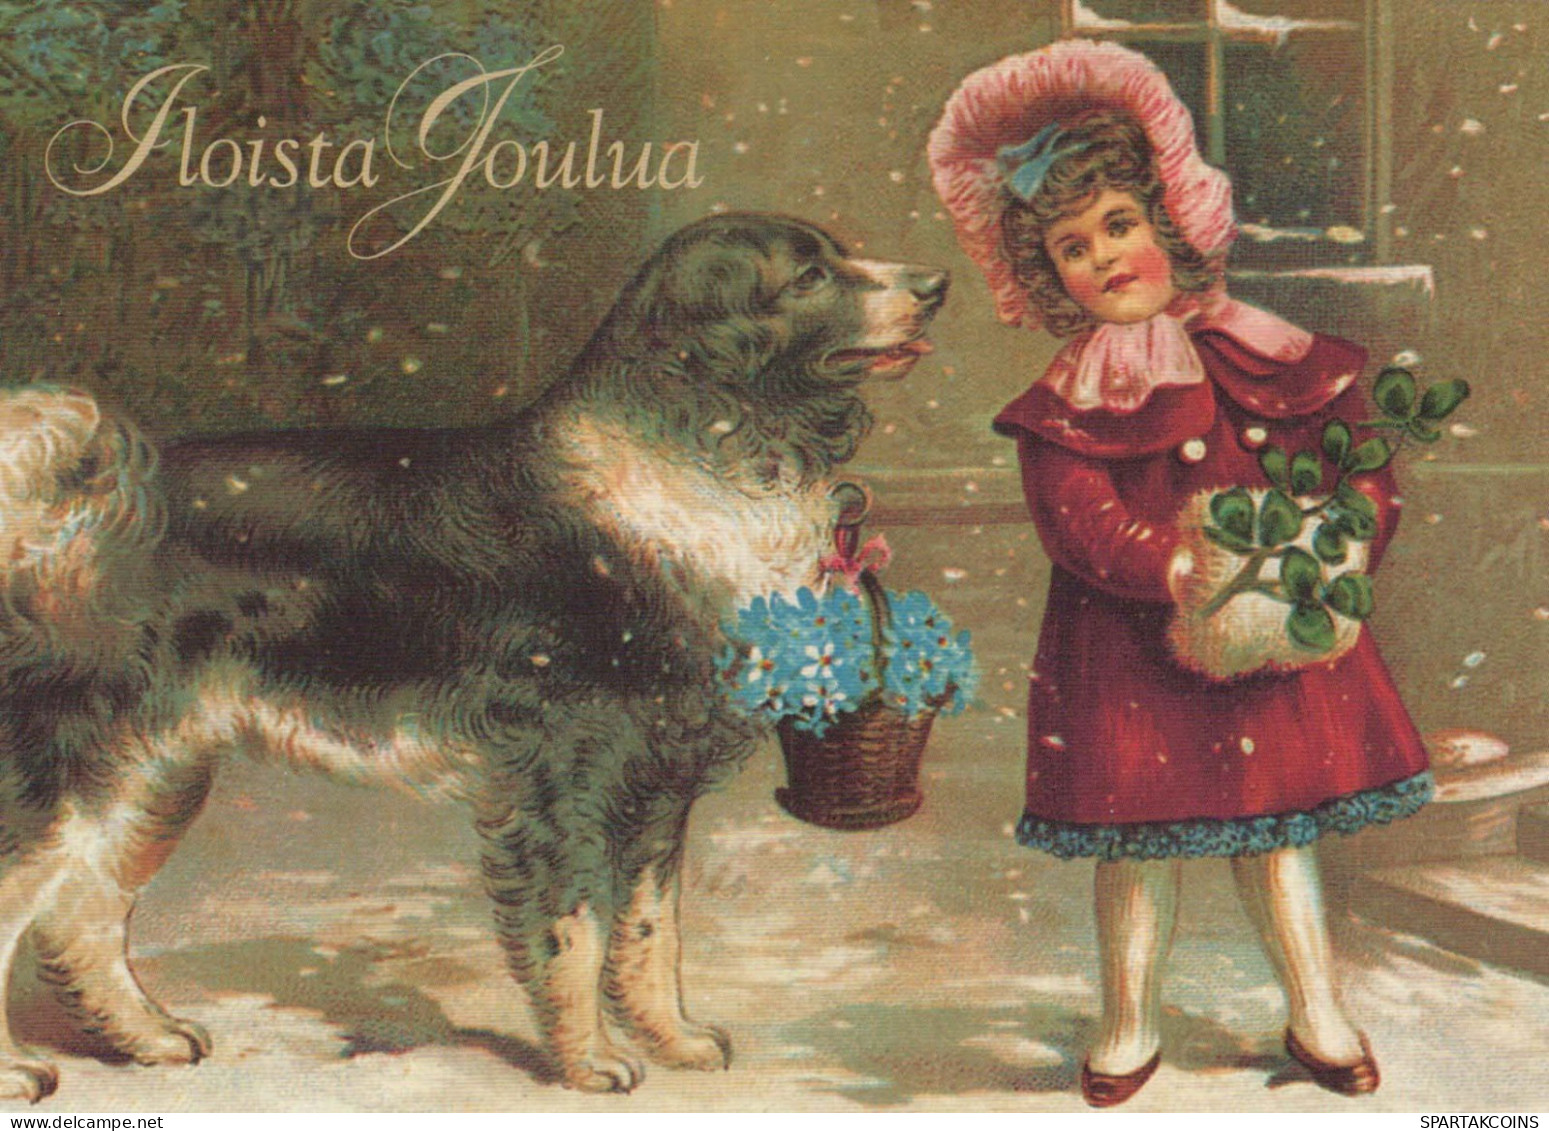 CANE Animale Vintage Cartolina CPSM #PBQ642.IT - Cani